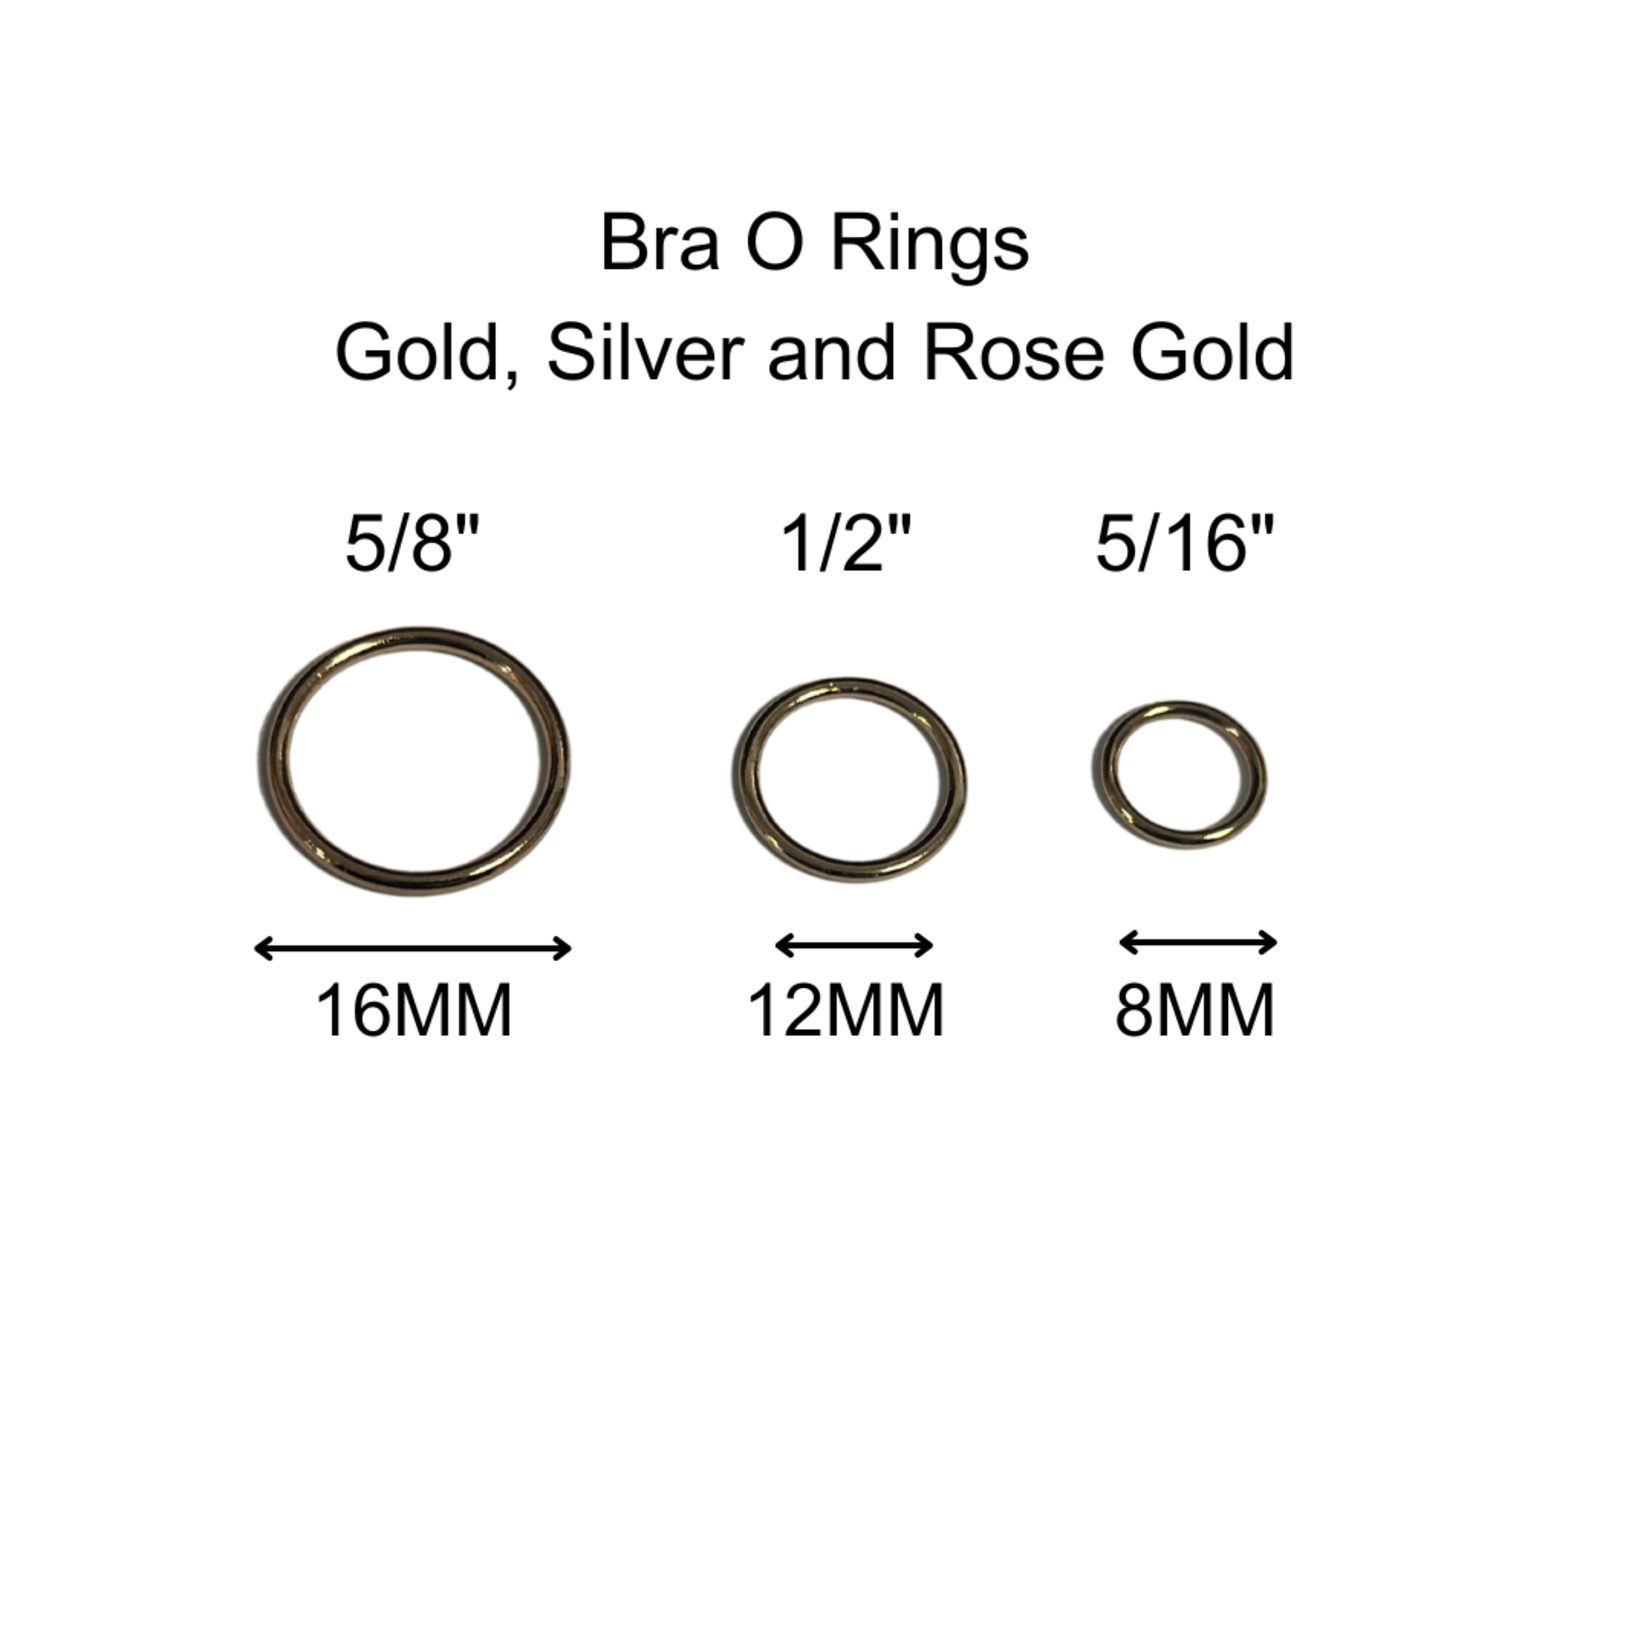 BRA O-RINGS (8MM) 5/16 INCH (100PCS/PACK) - GOLD